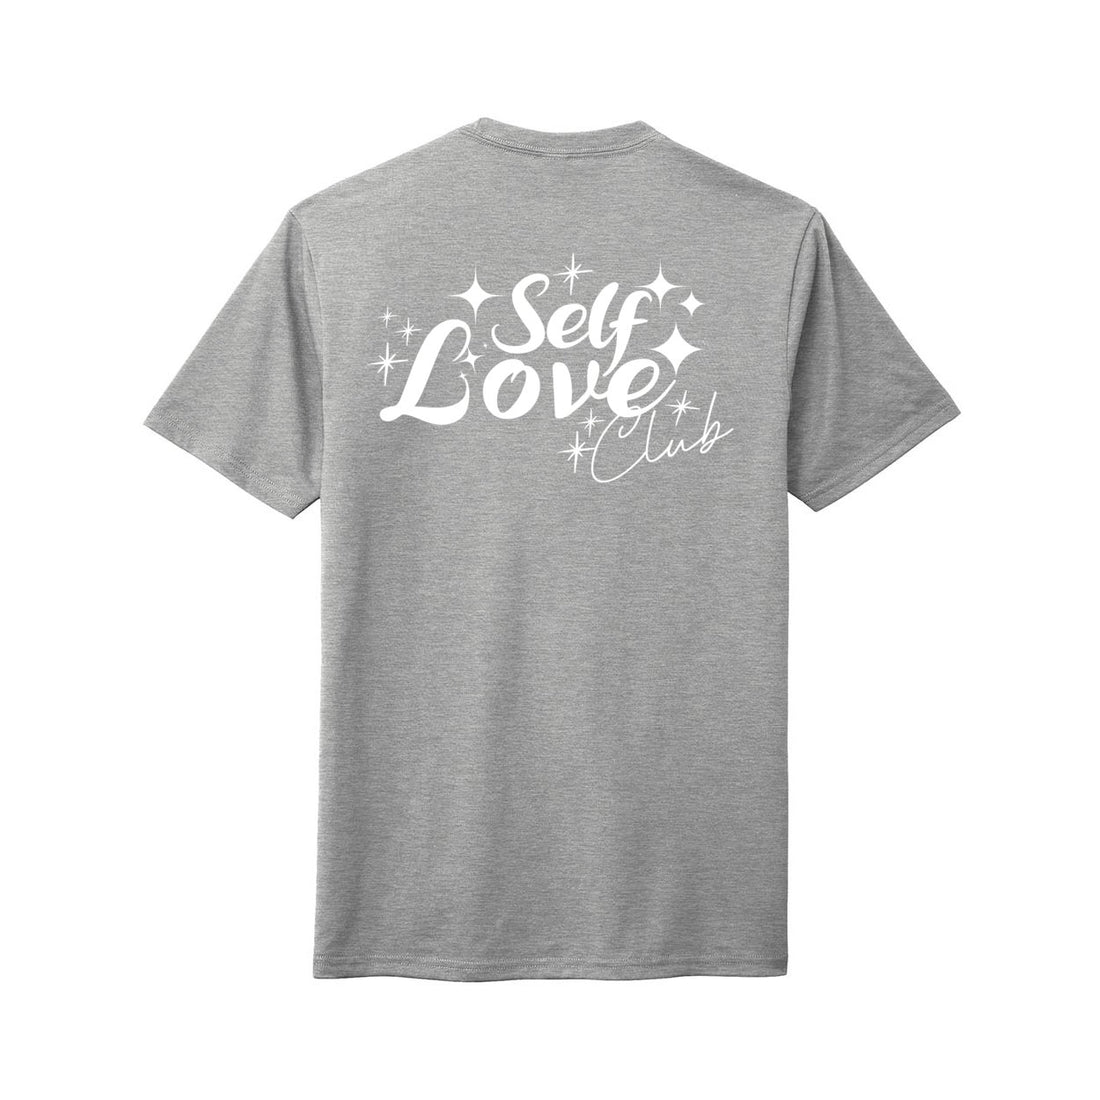 Self Love Club District Tee - T-Shirts - Positively Sassy - Self Love Club District Tee